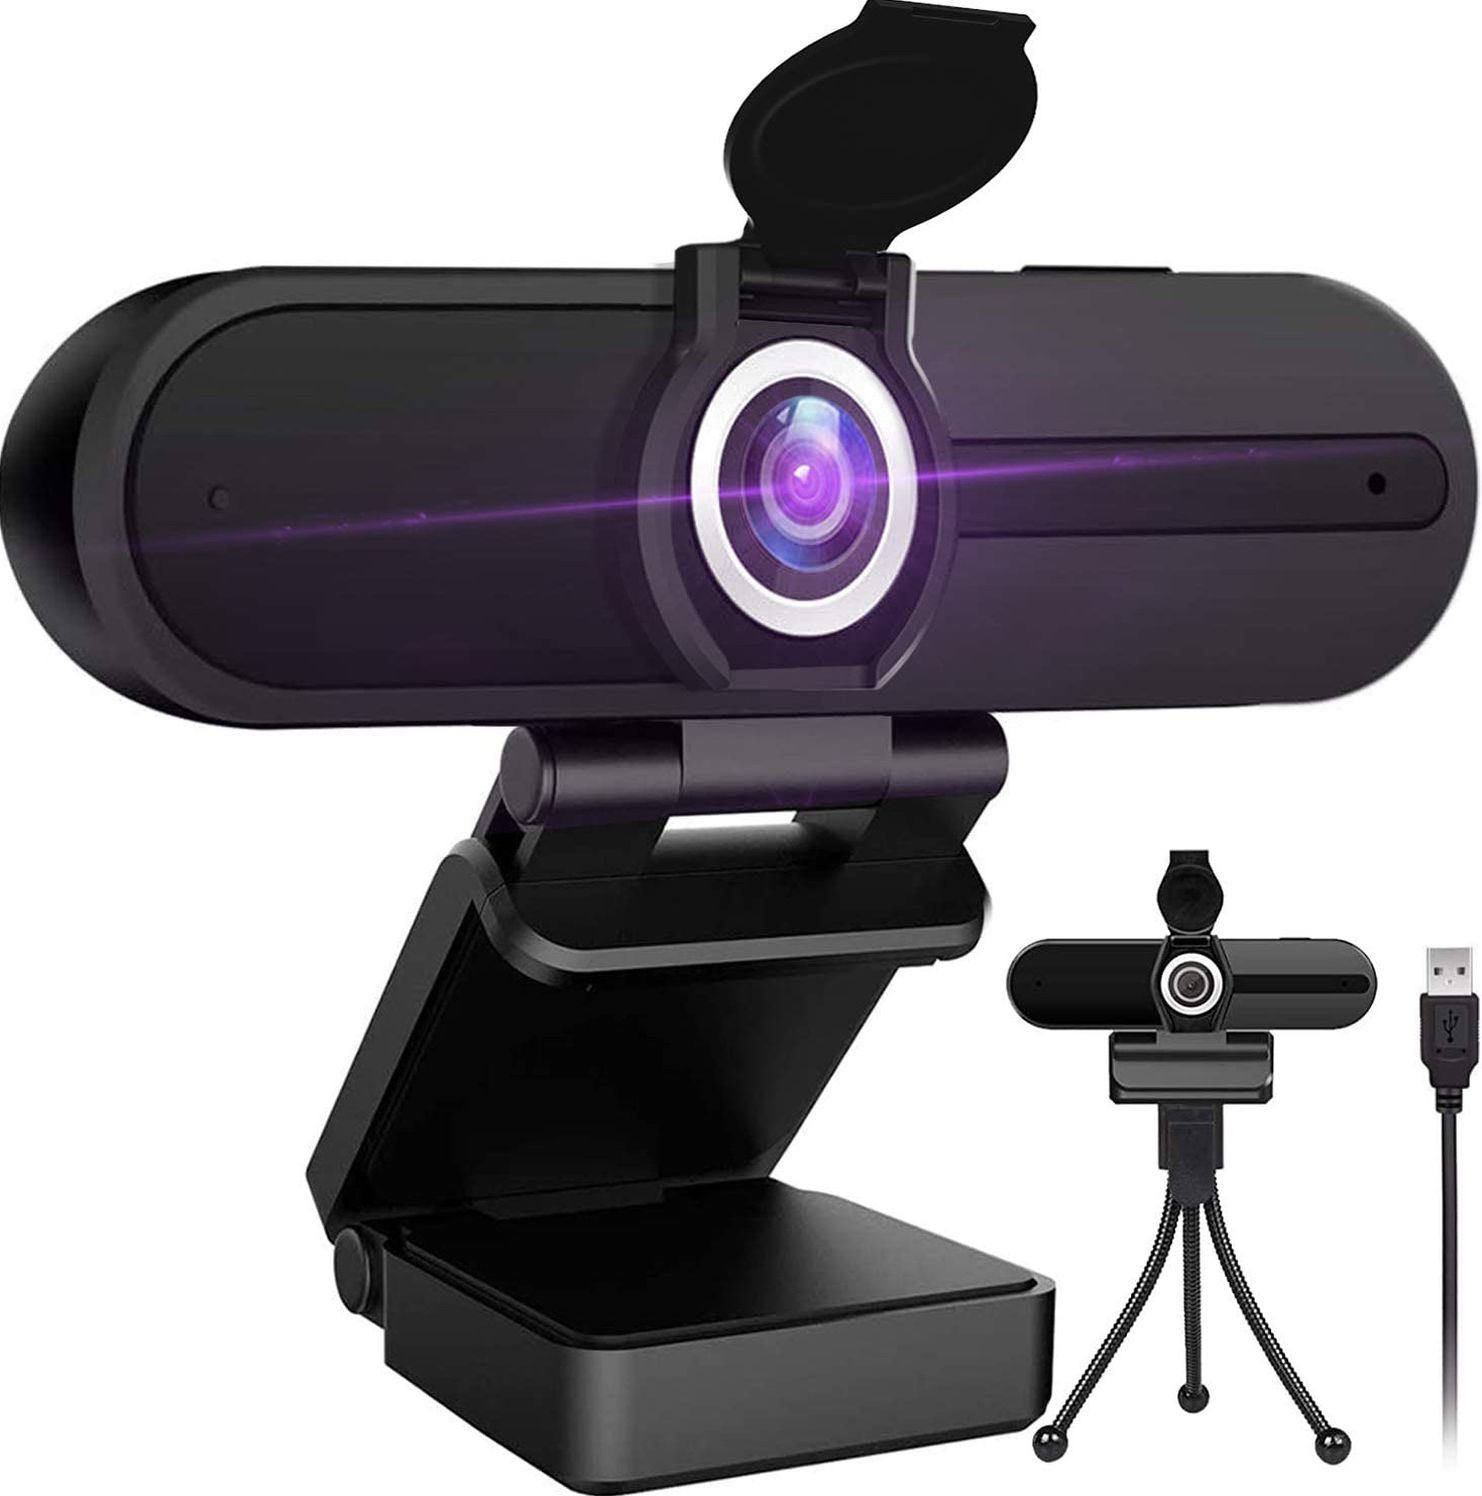 4K Webcam with Microphone,8 Megapixel Webcam,Ultra HD PC Computer Web Camera,Laptop Desktop Camera,USB Webcam with Privacy Cover,Pro Streaming Webcam